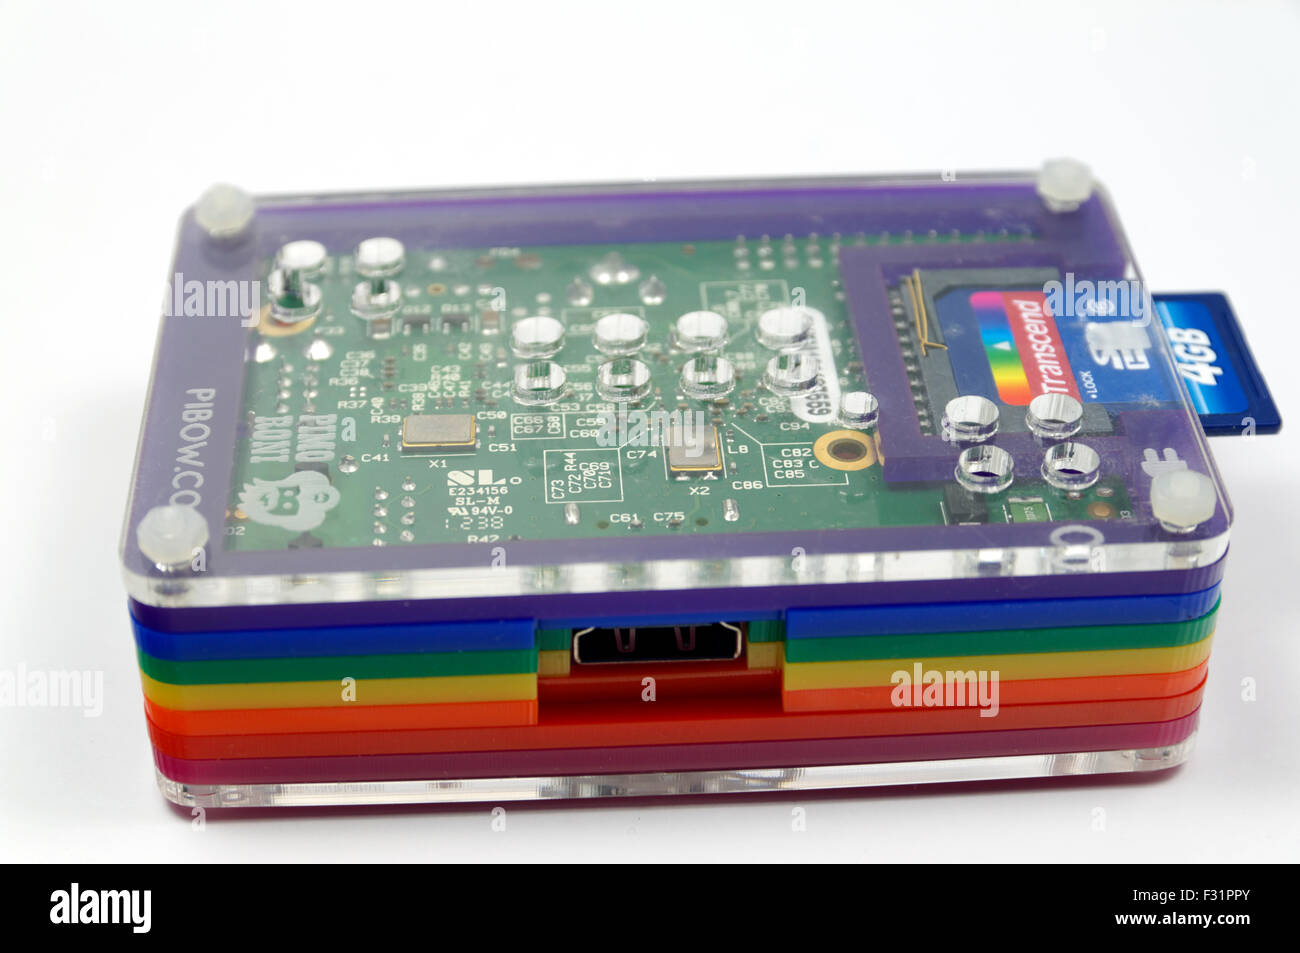 Raspberry Pi Computer. Stockfoto